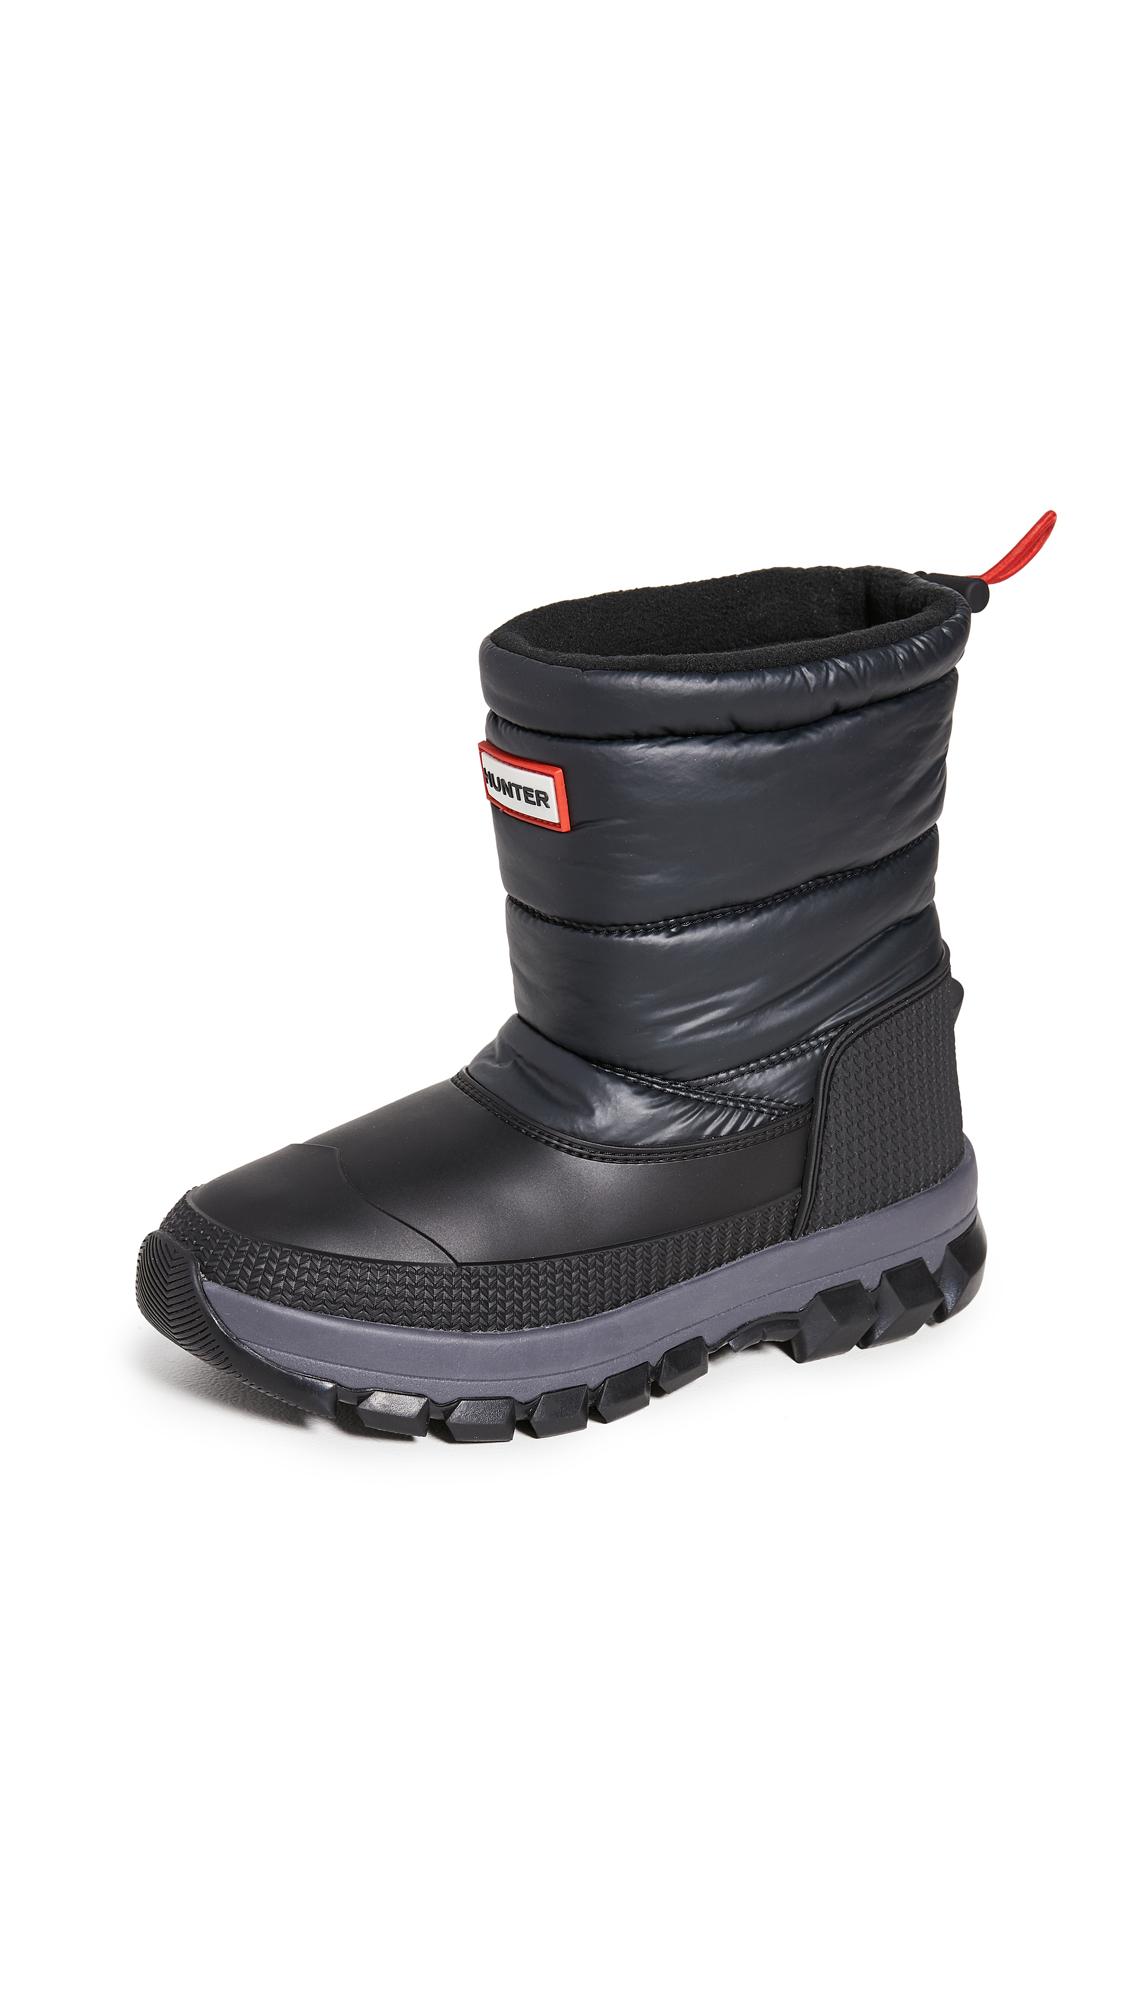 HUNTER Original Insulated Snow Boot Short in Black | Lyst